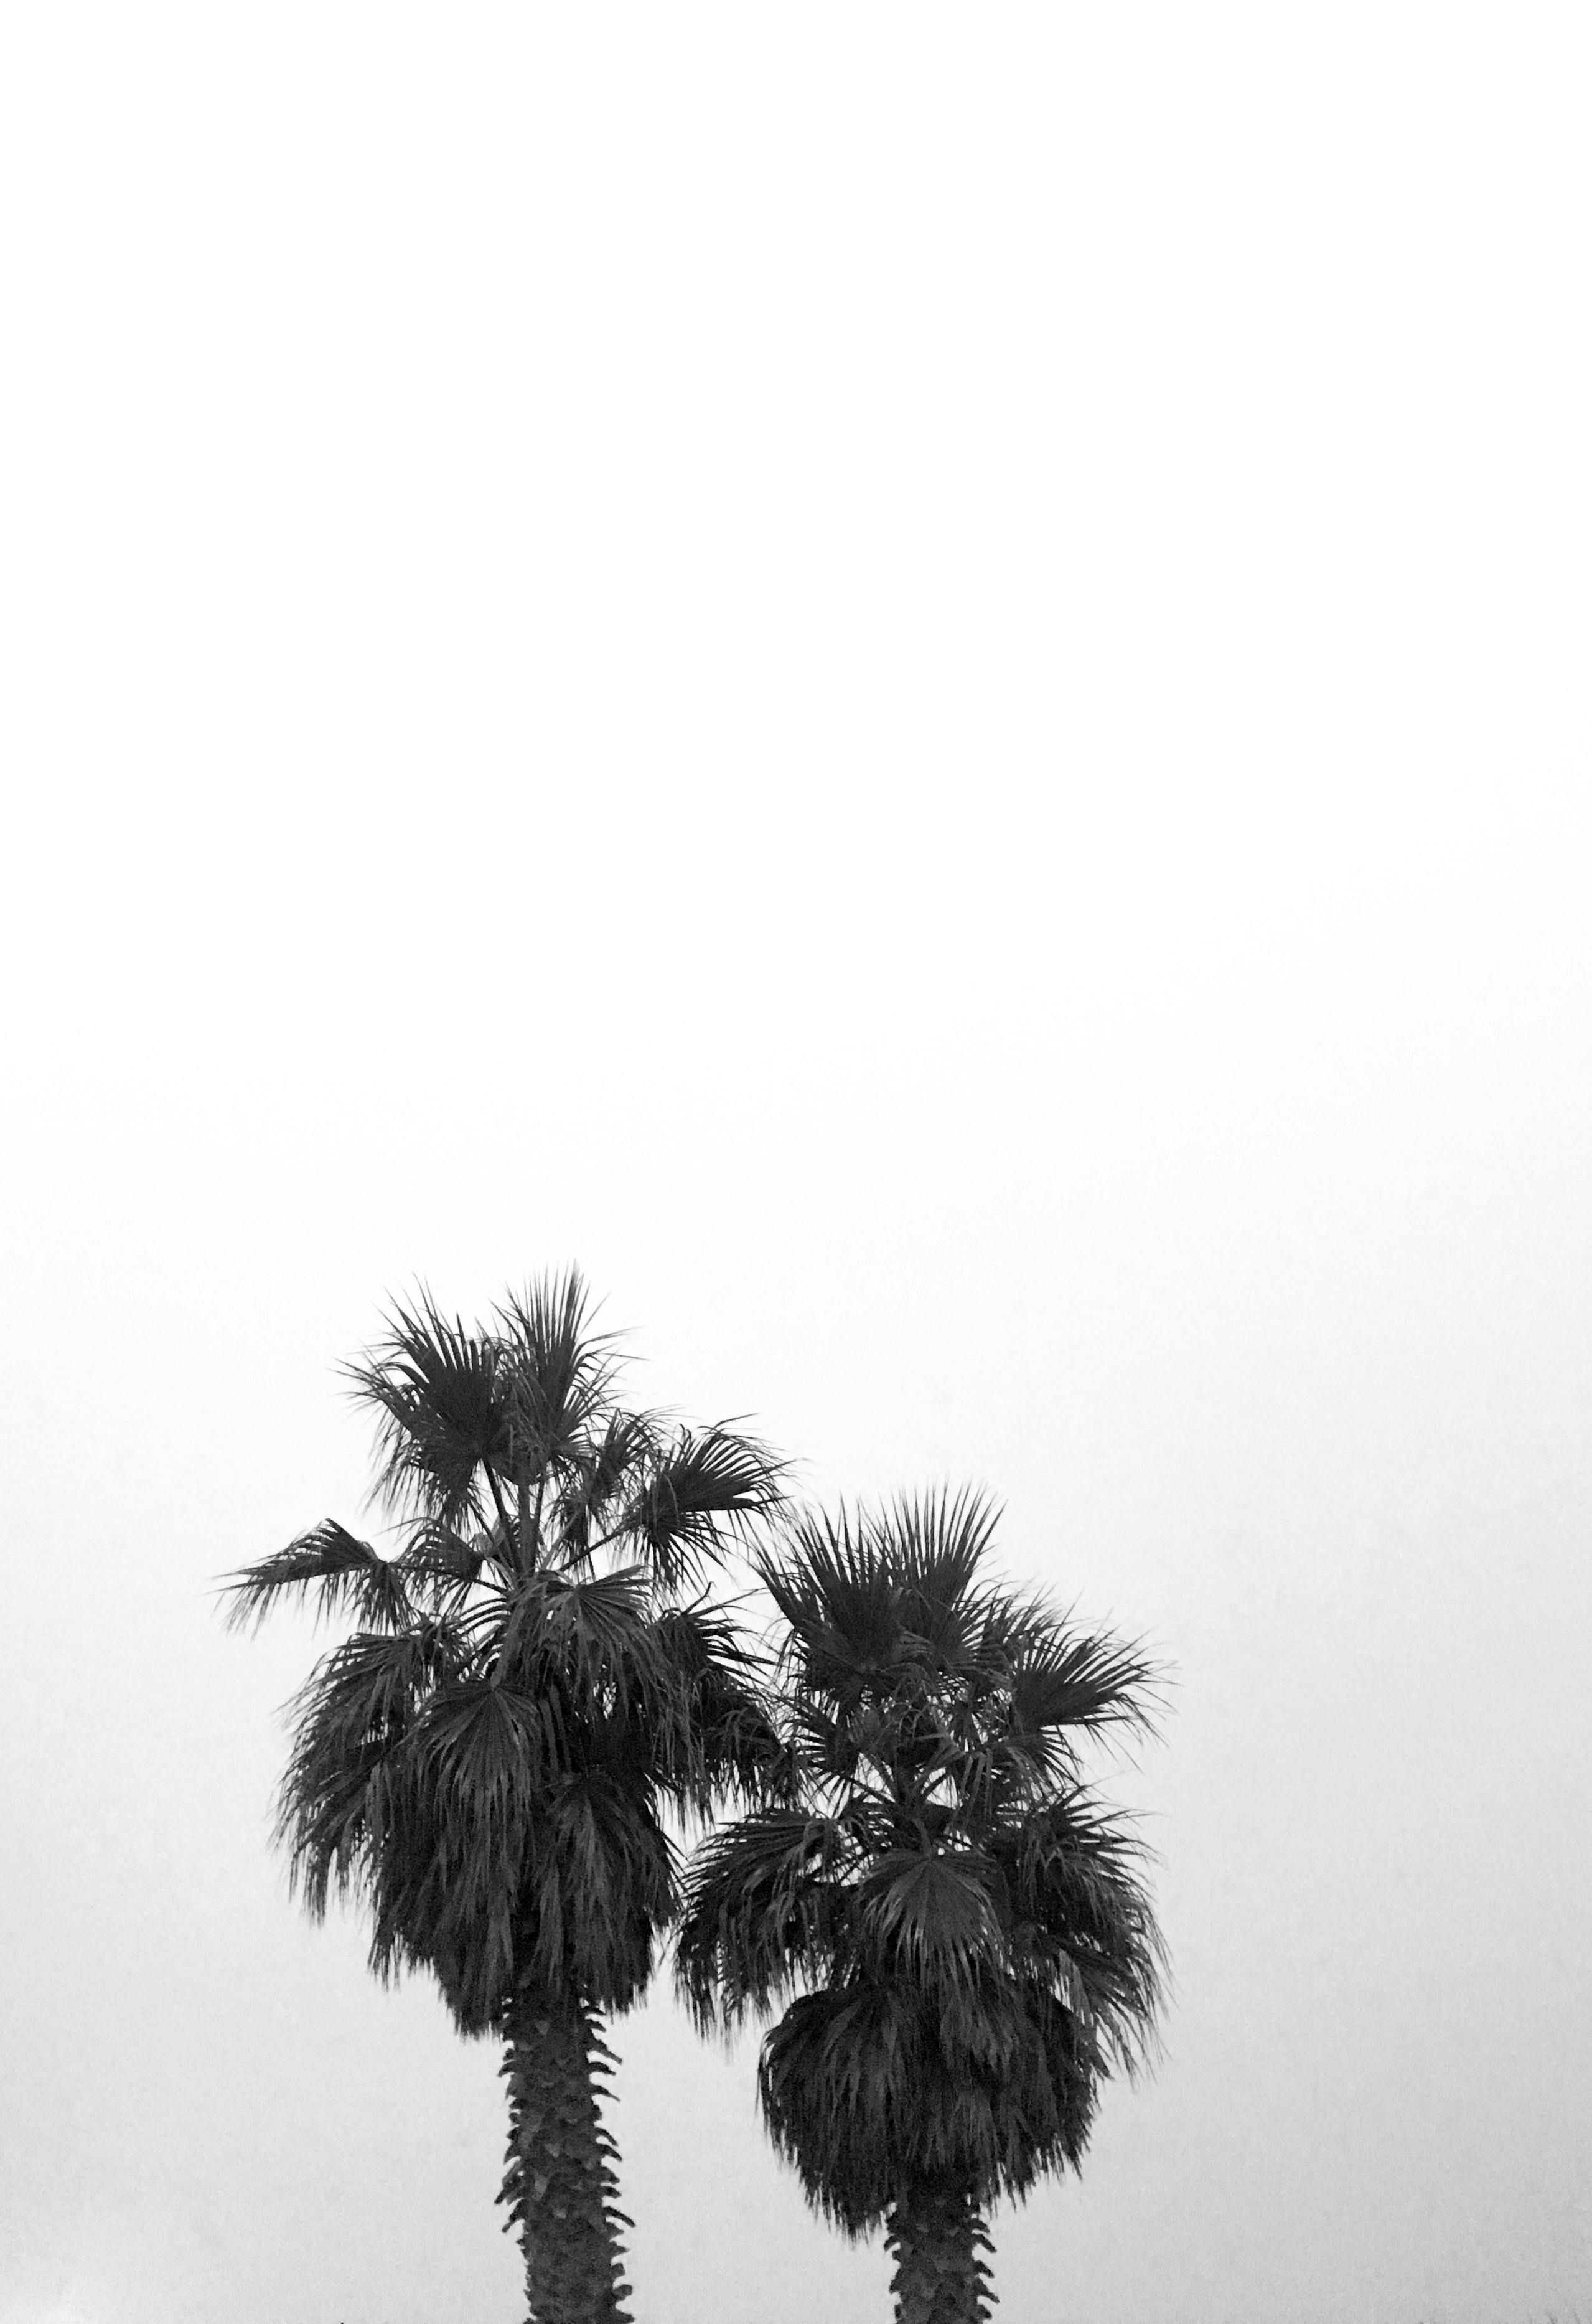 Free stock photo of palm, palm tree, palm trees